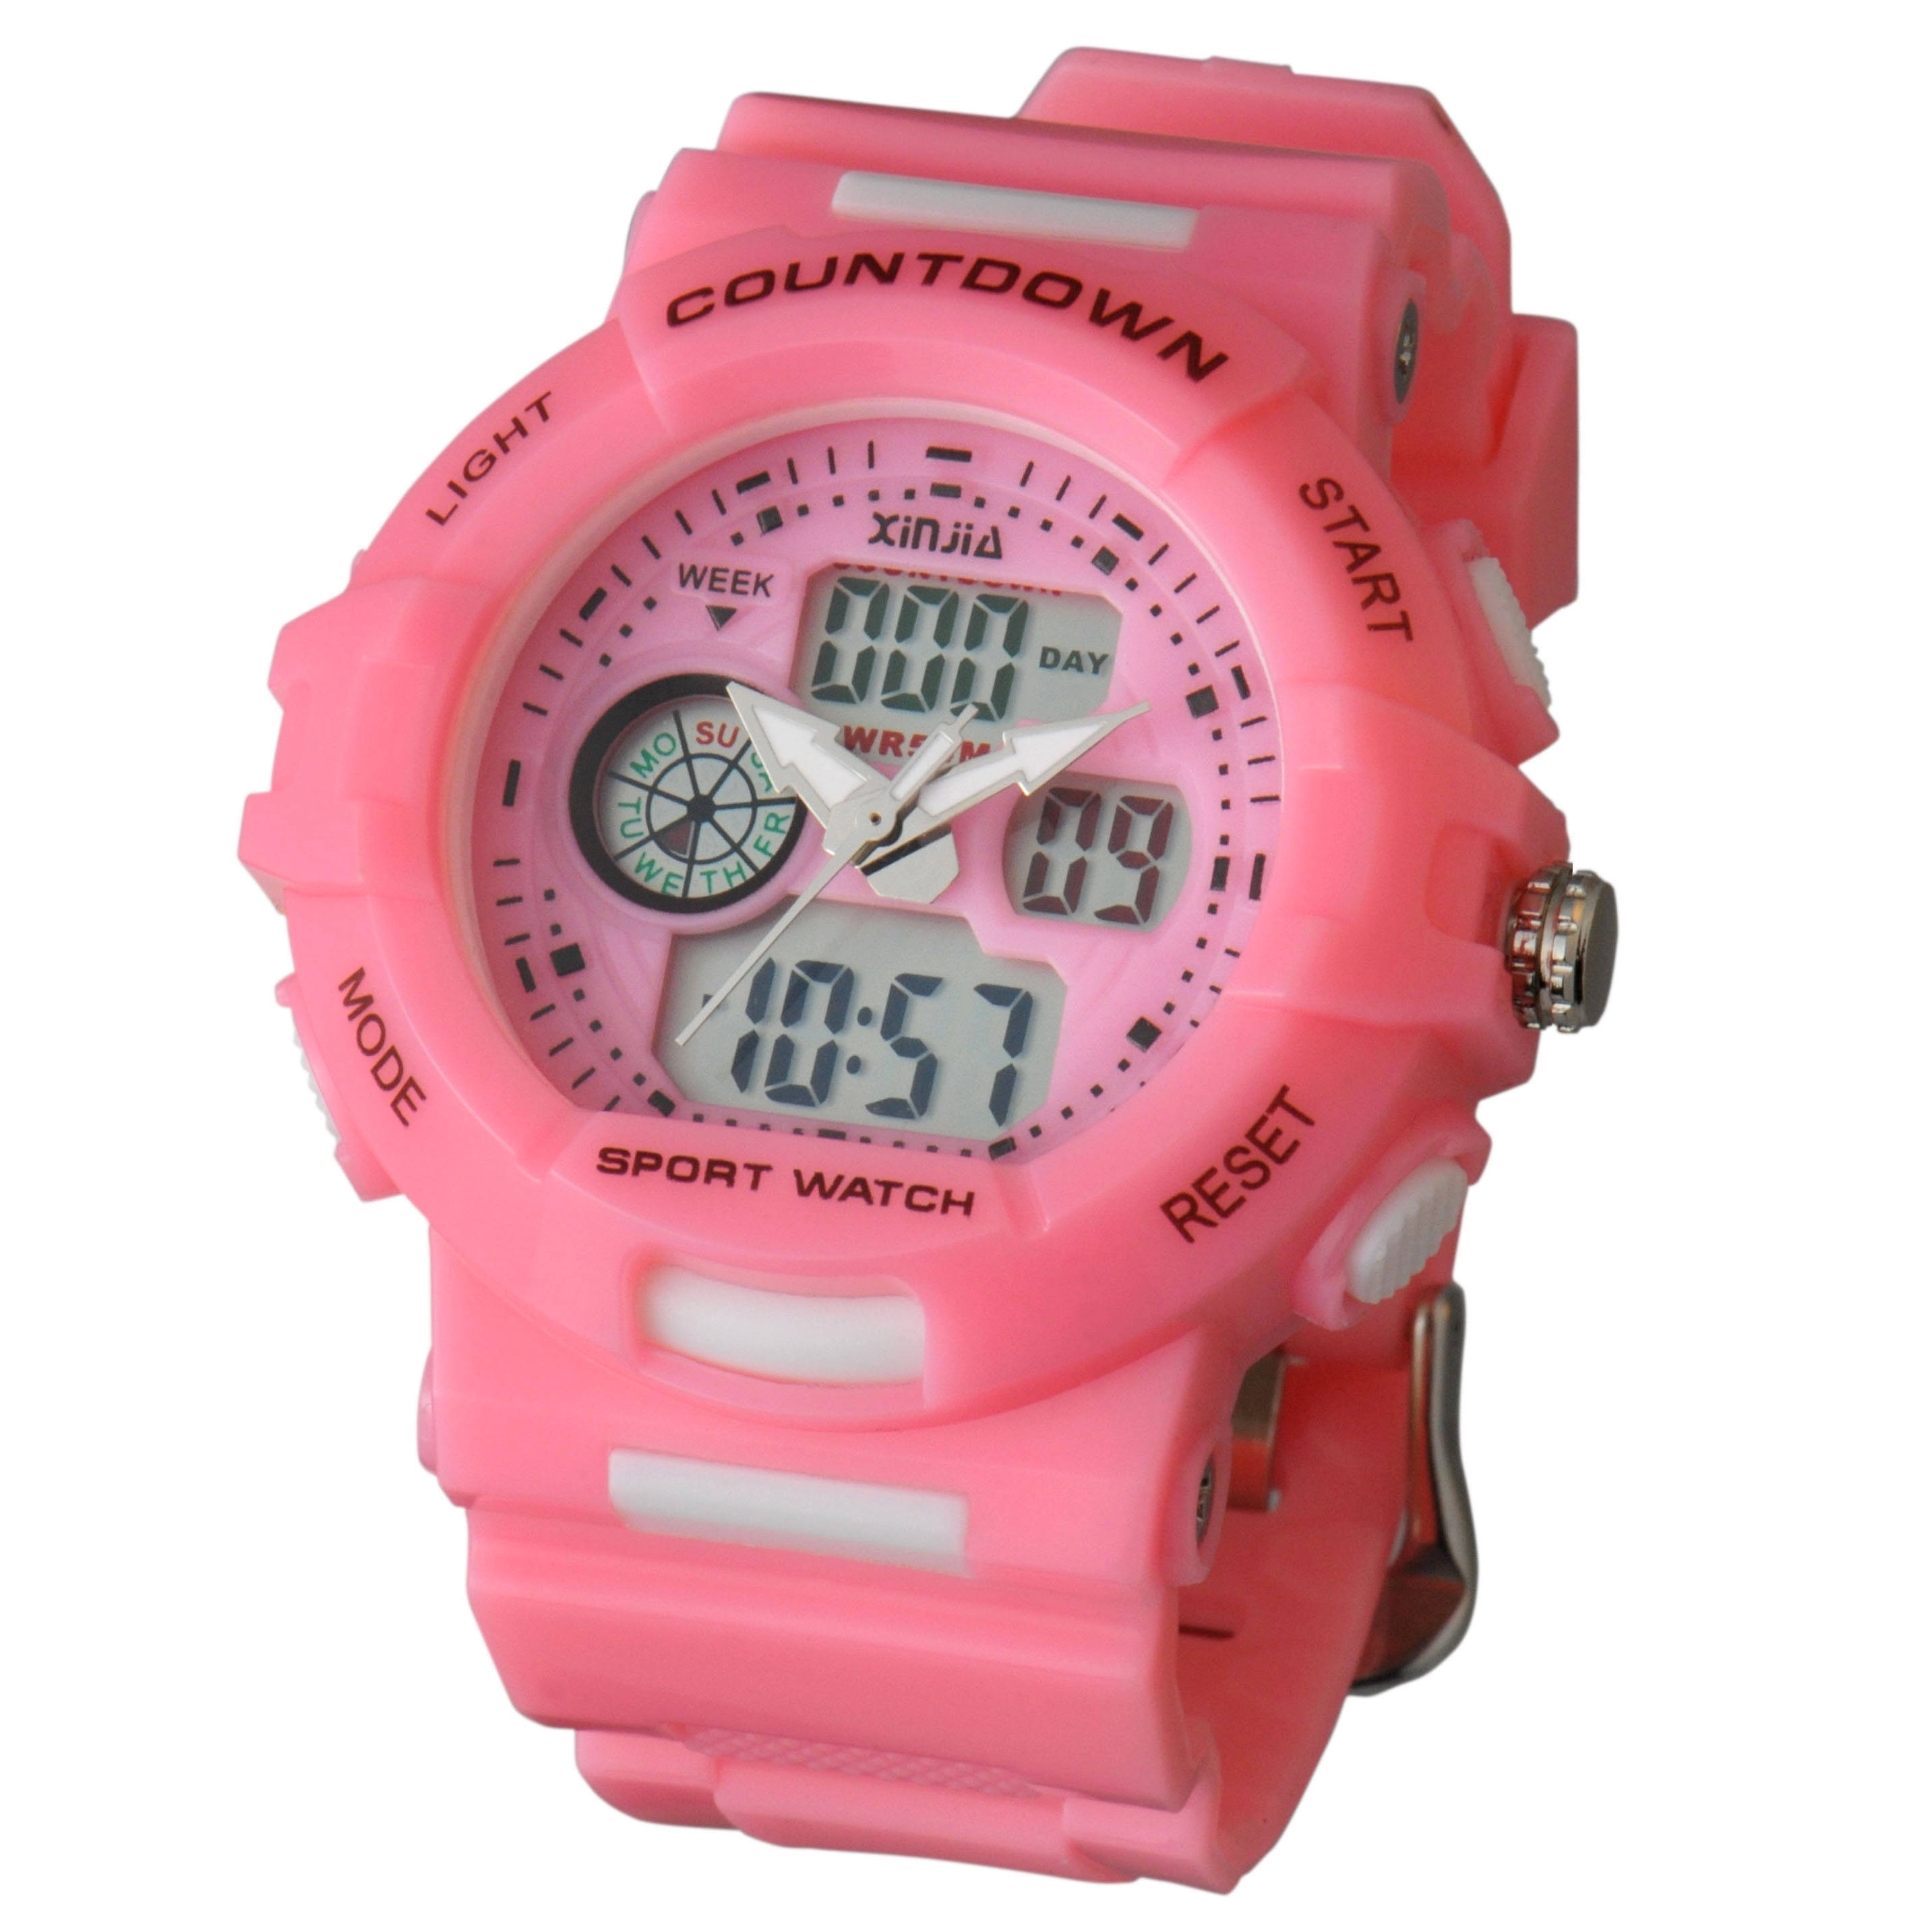 Daily Countdown Waterproof Analog-Digital Wrist Watch In Promotion